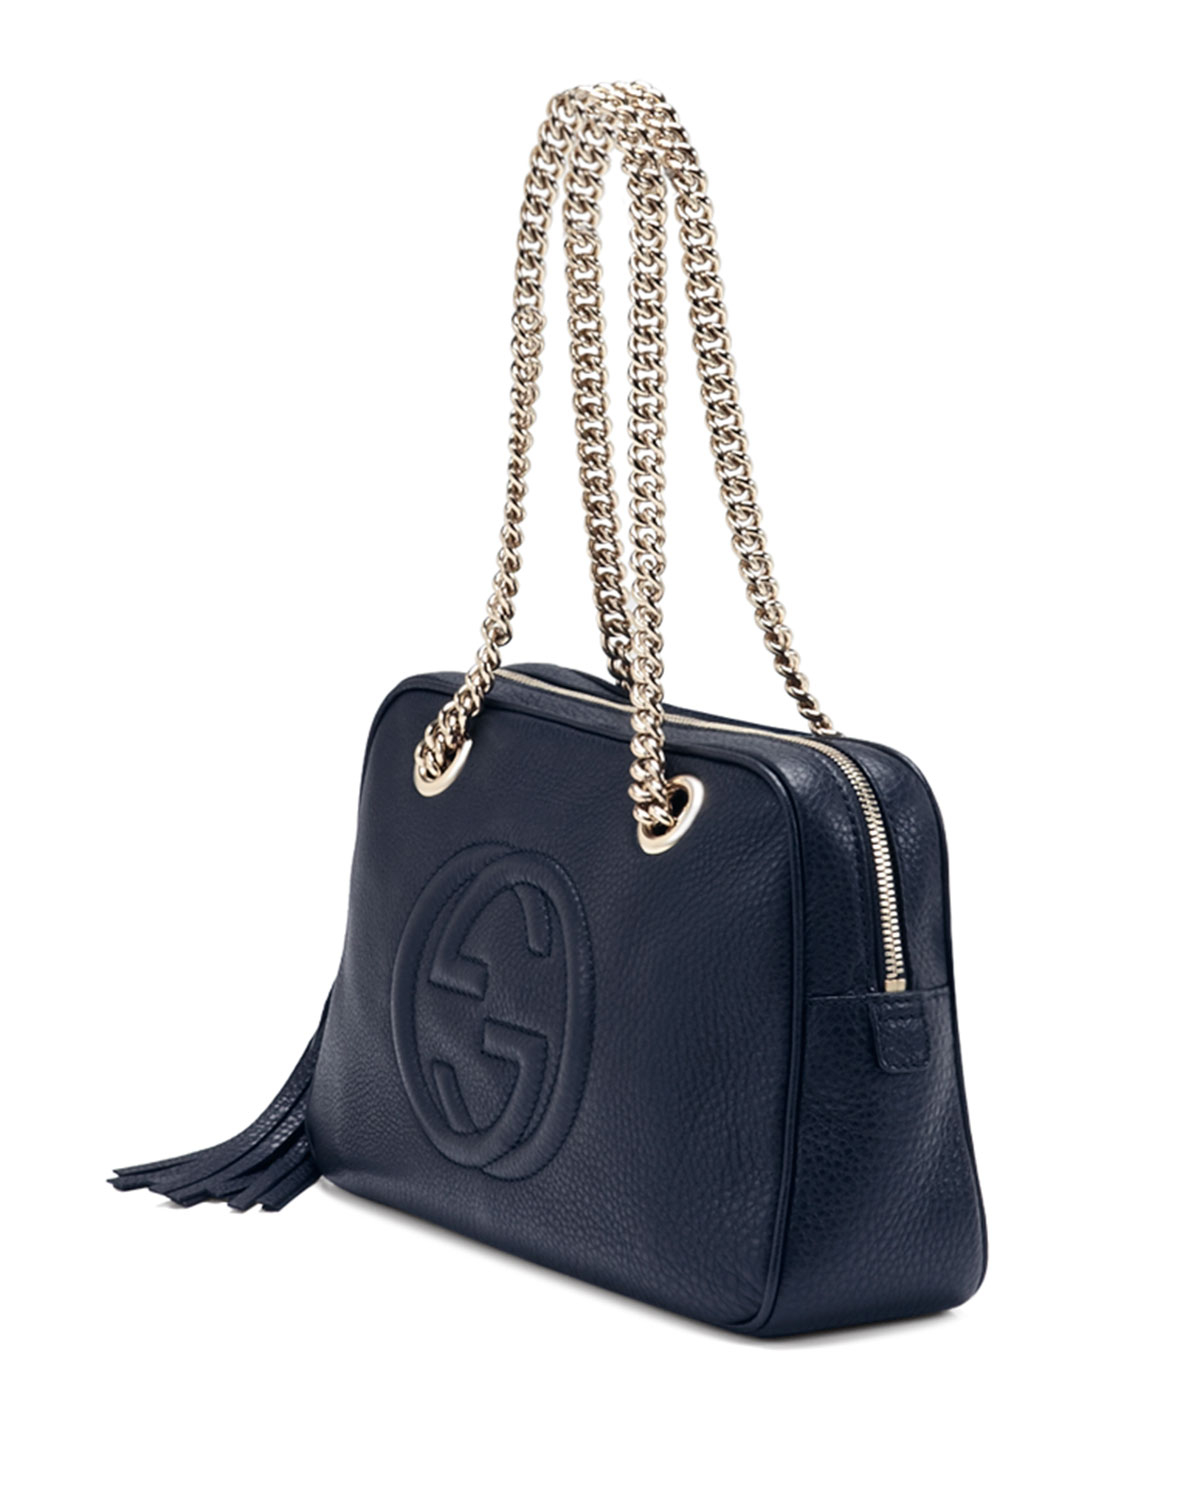 Gucci Black Patent Leather Bag | IQS Executive